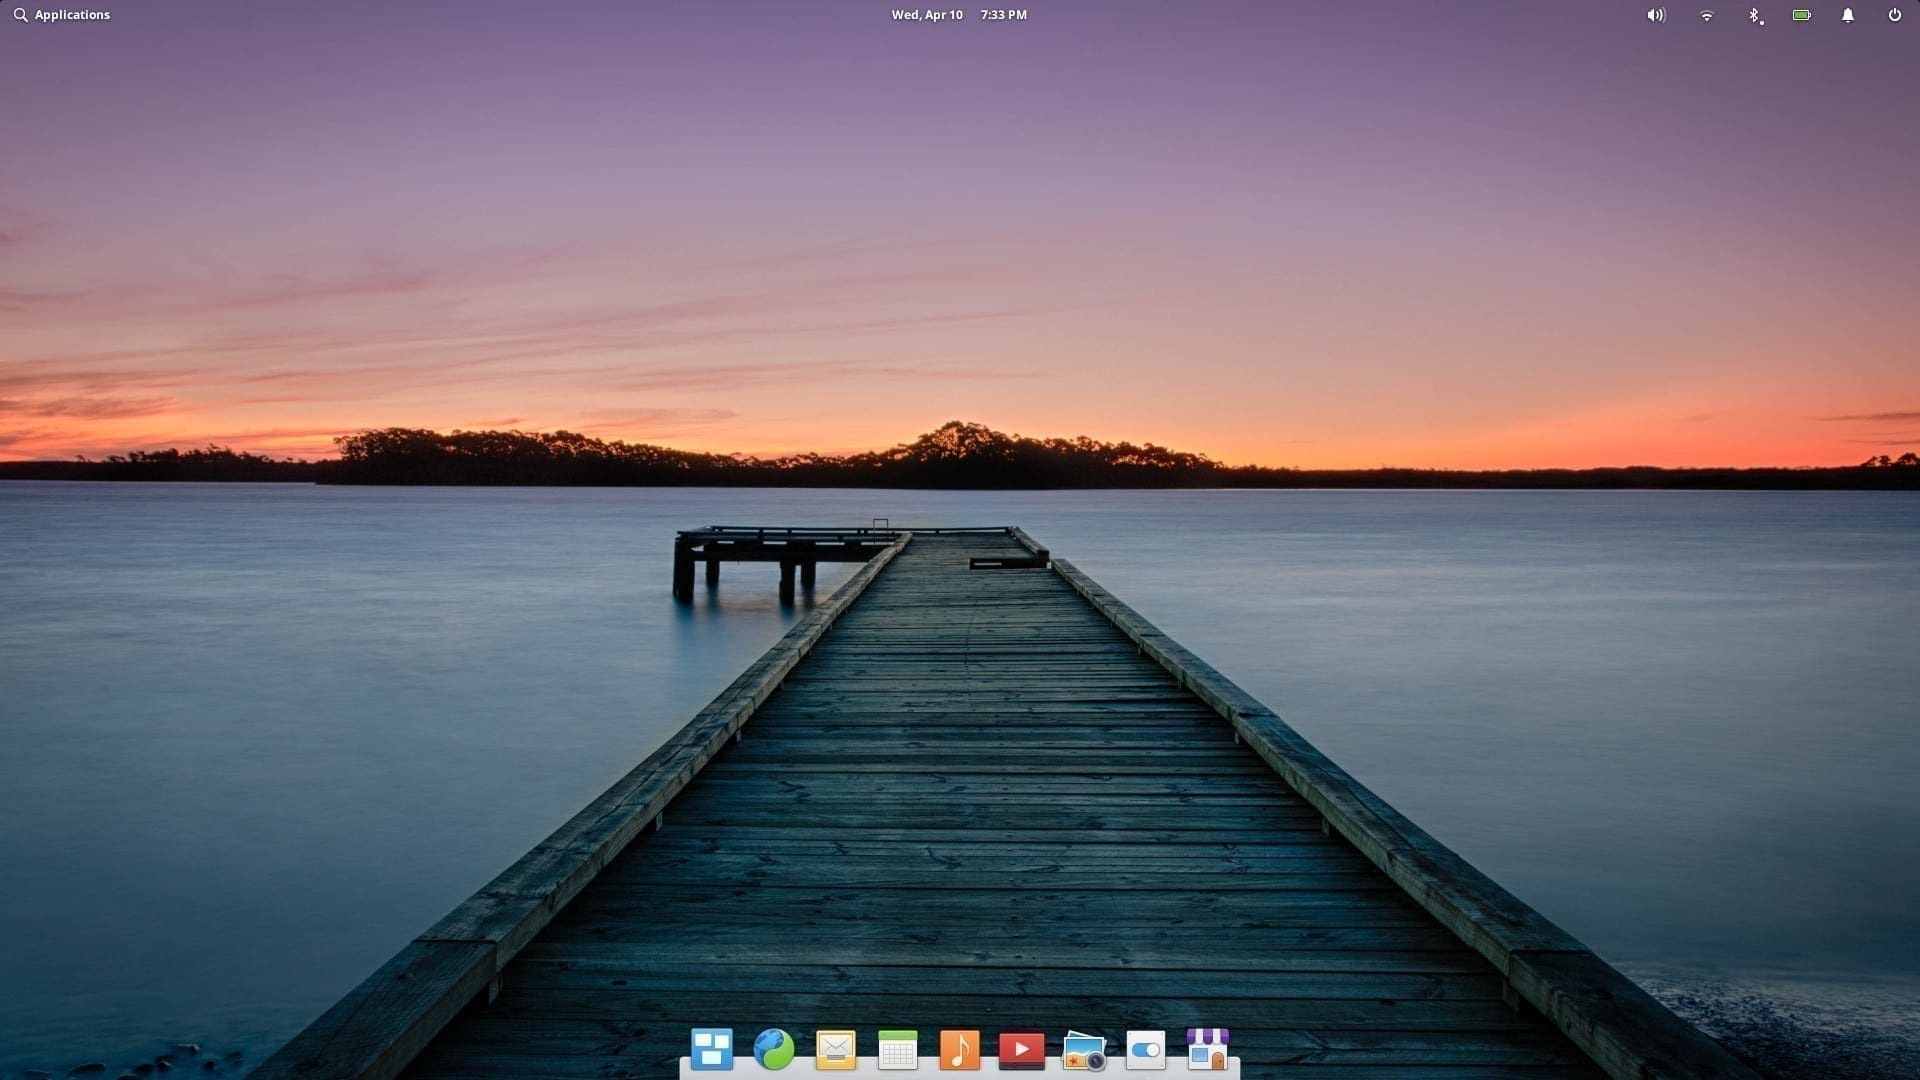 elementary OS 5.3 Hera desktop